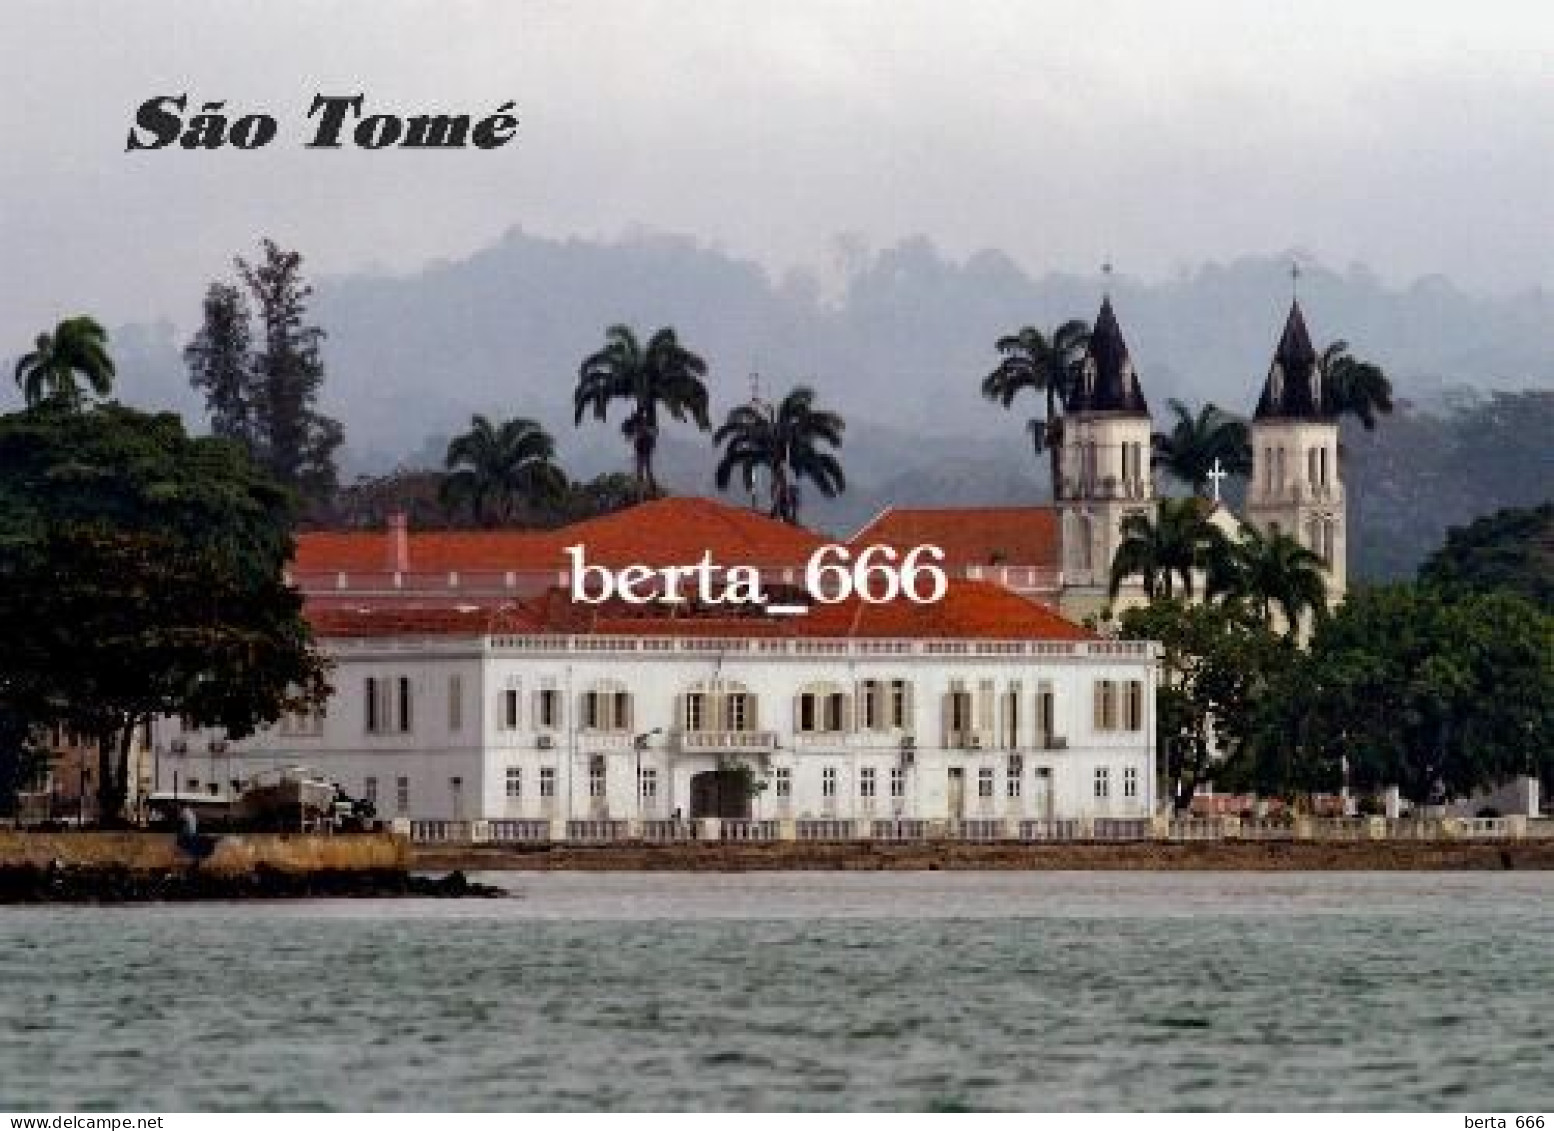 Sao Tome And Principe Sao Tome City Waterfront Cathedral New Postcard - Sao Tome And Principe